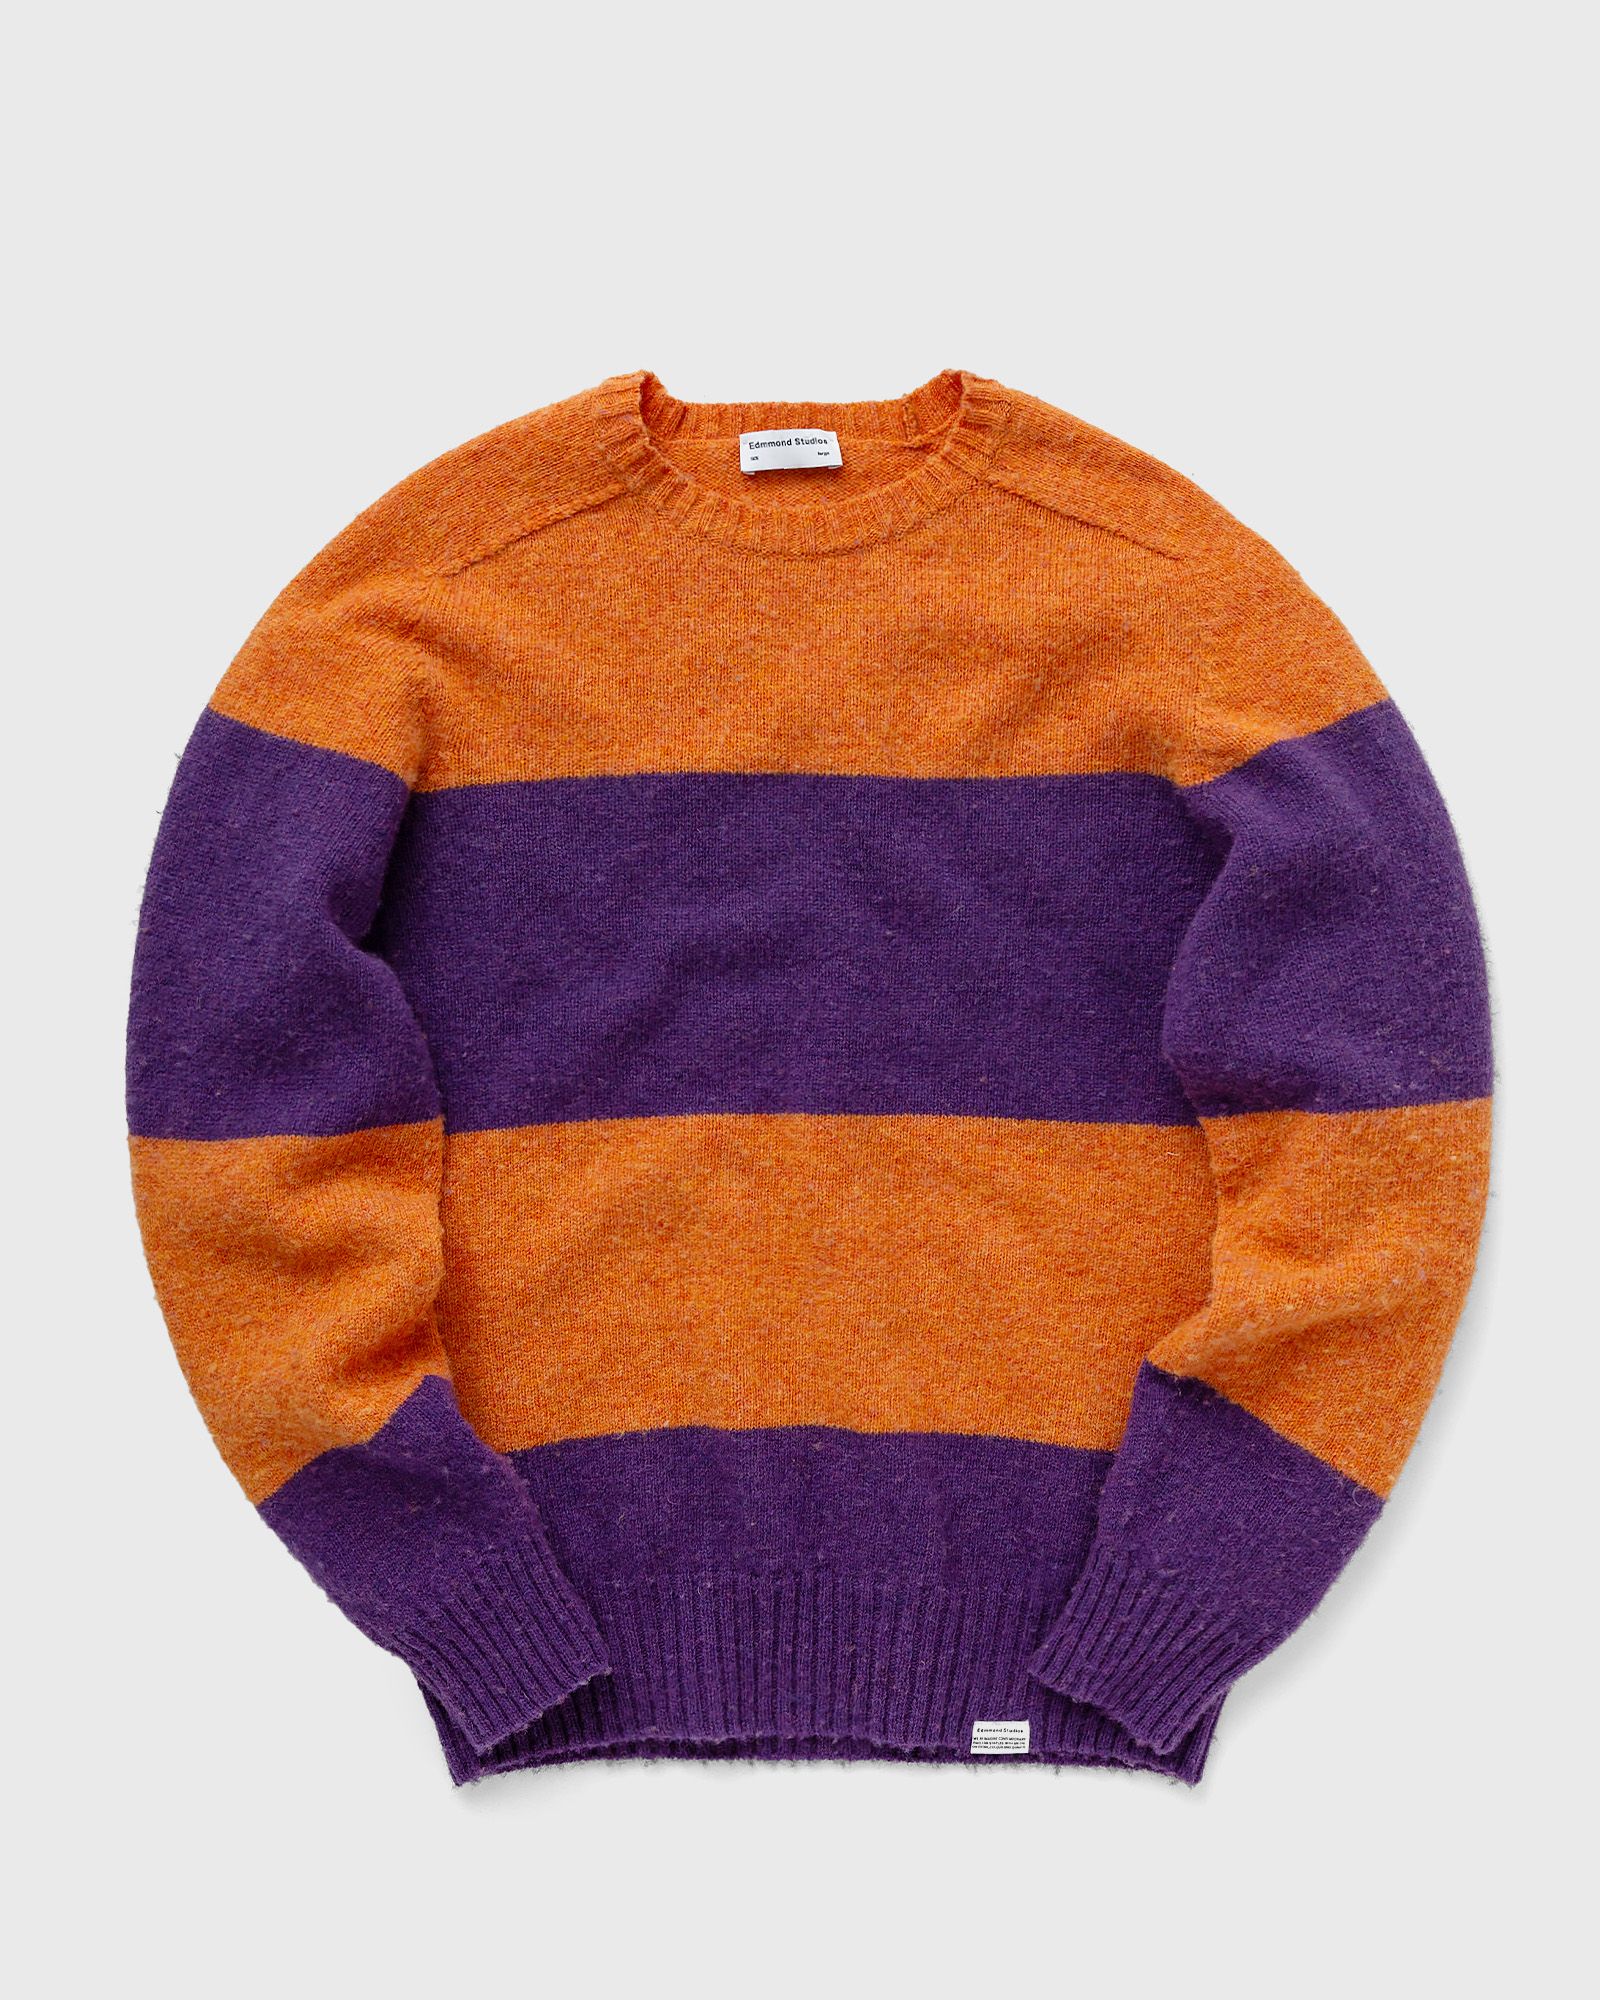 Edmmond Studios - stripes sweater men pullovers orange|purple in größe:xl